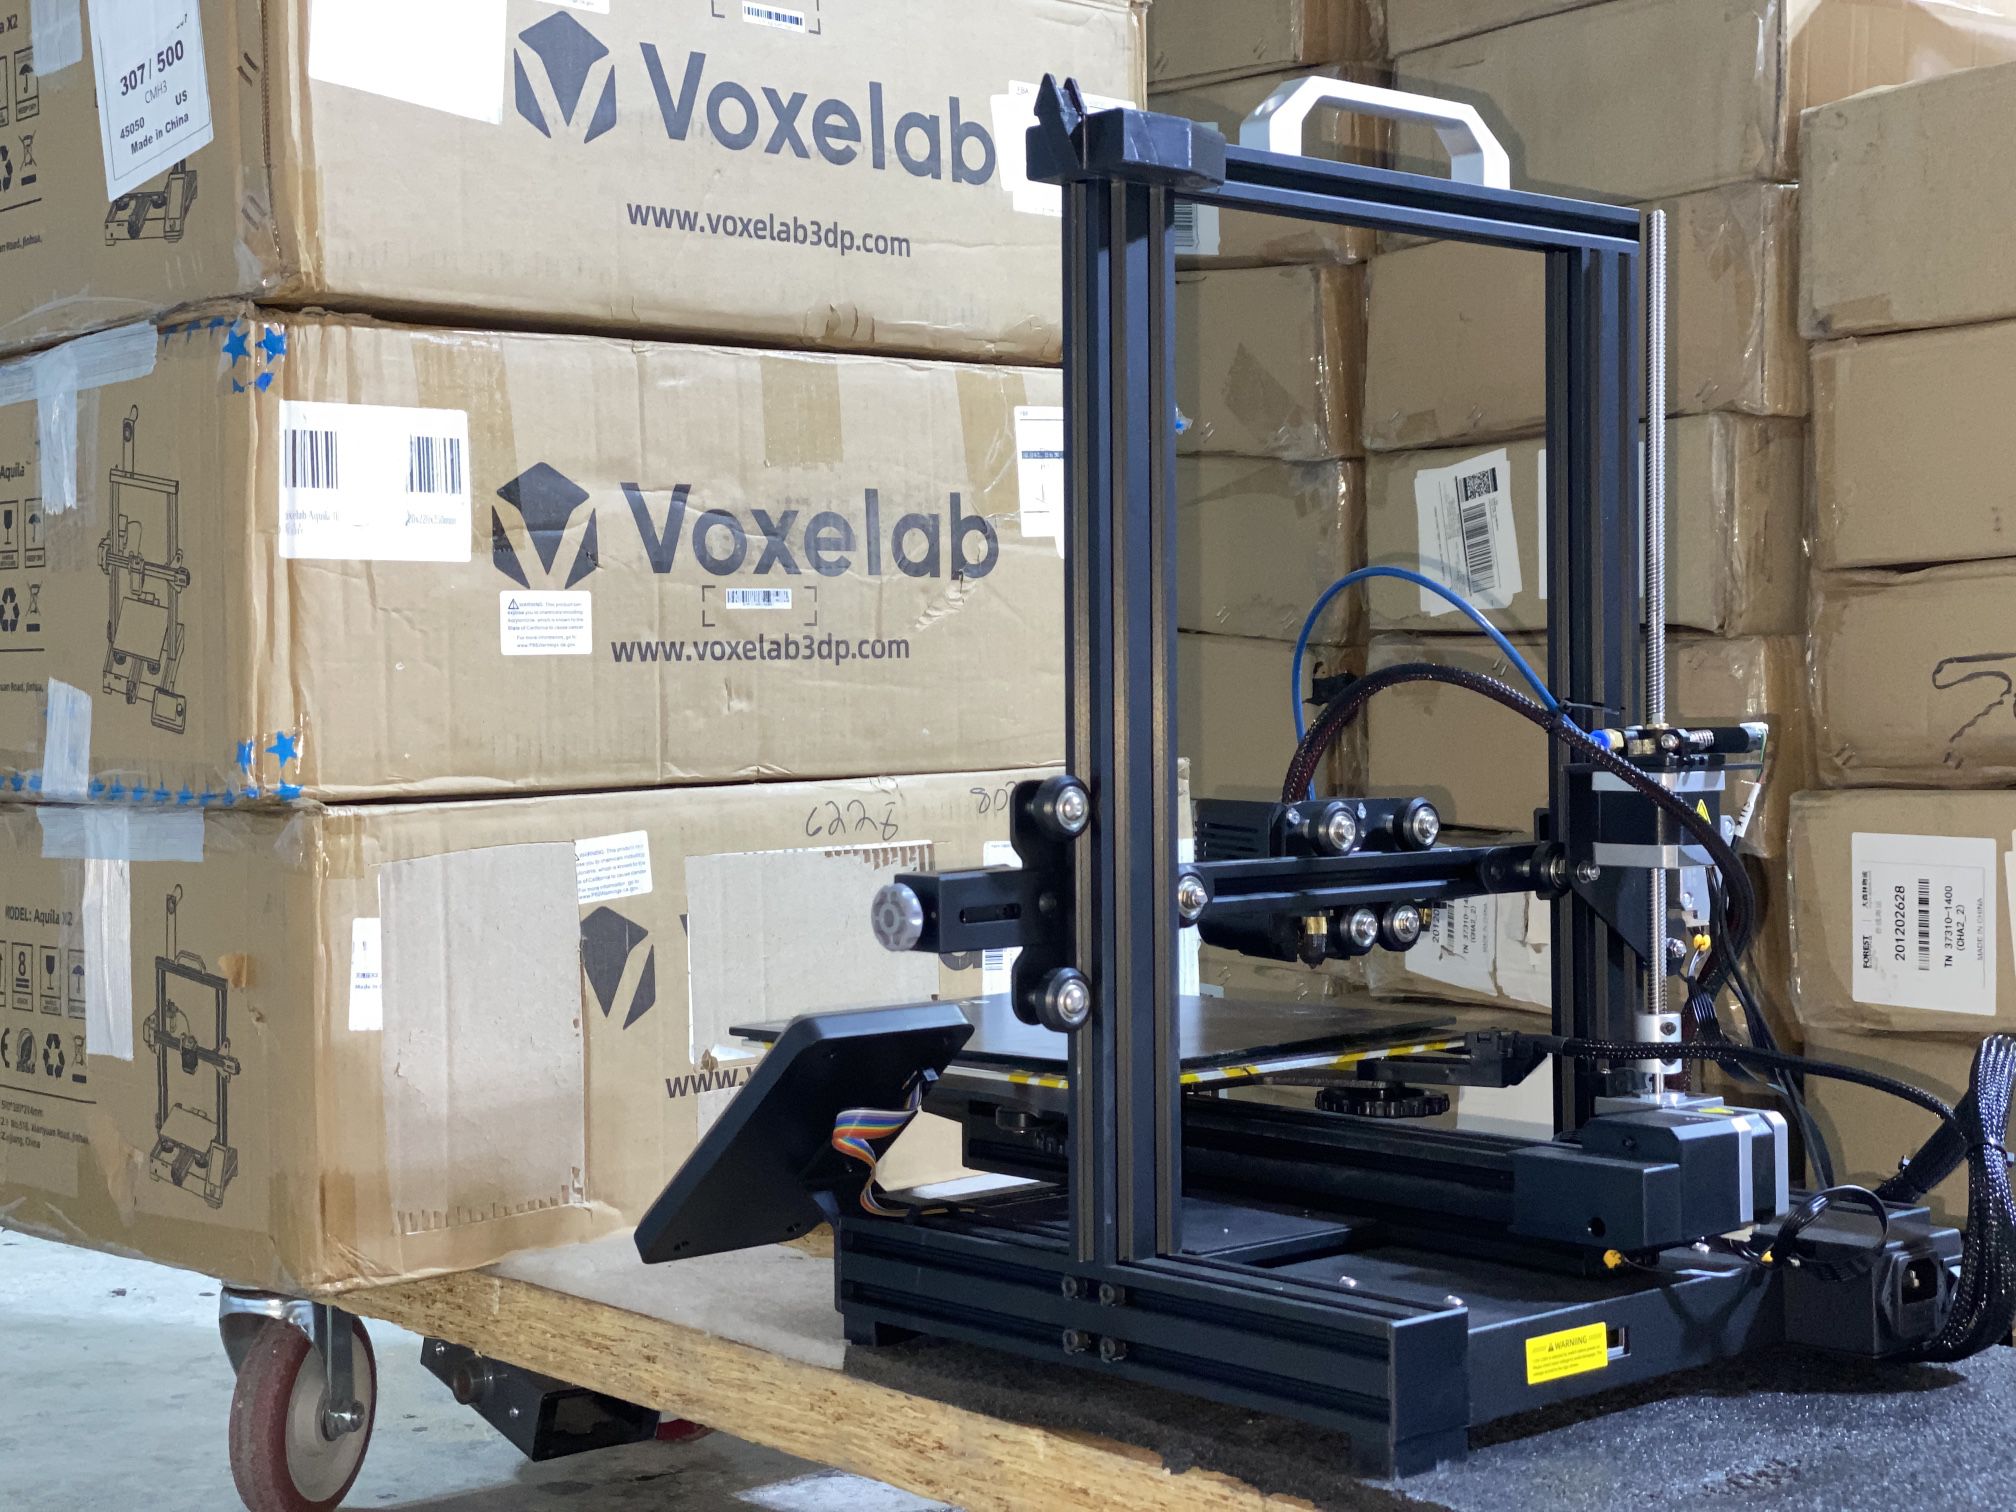 Voxelab Aquila X2 Upgrade 3D Printer w/ Filament Detector Upgraded TMC2208 Board